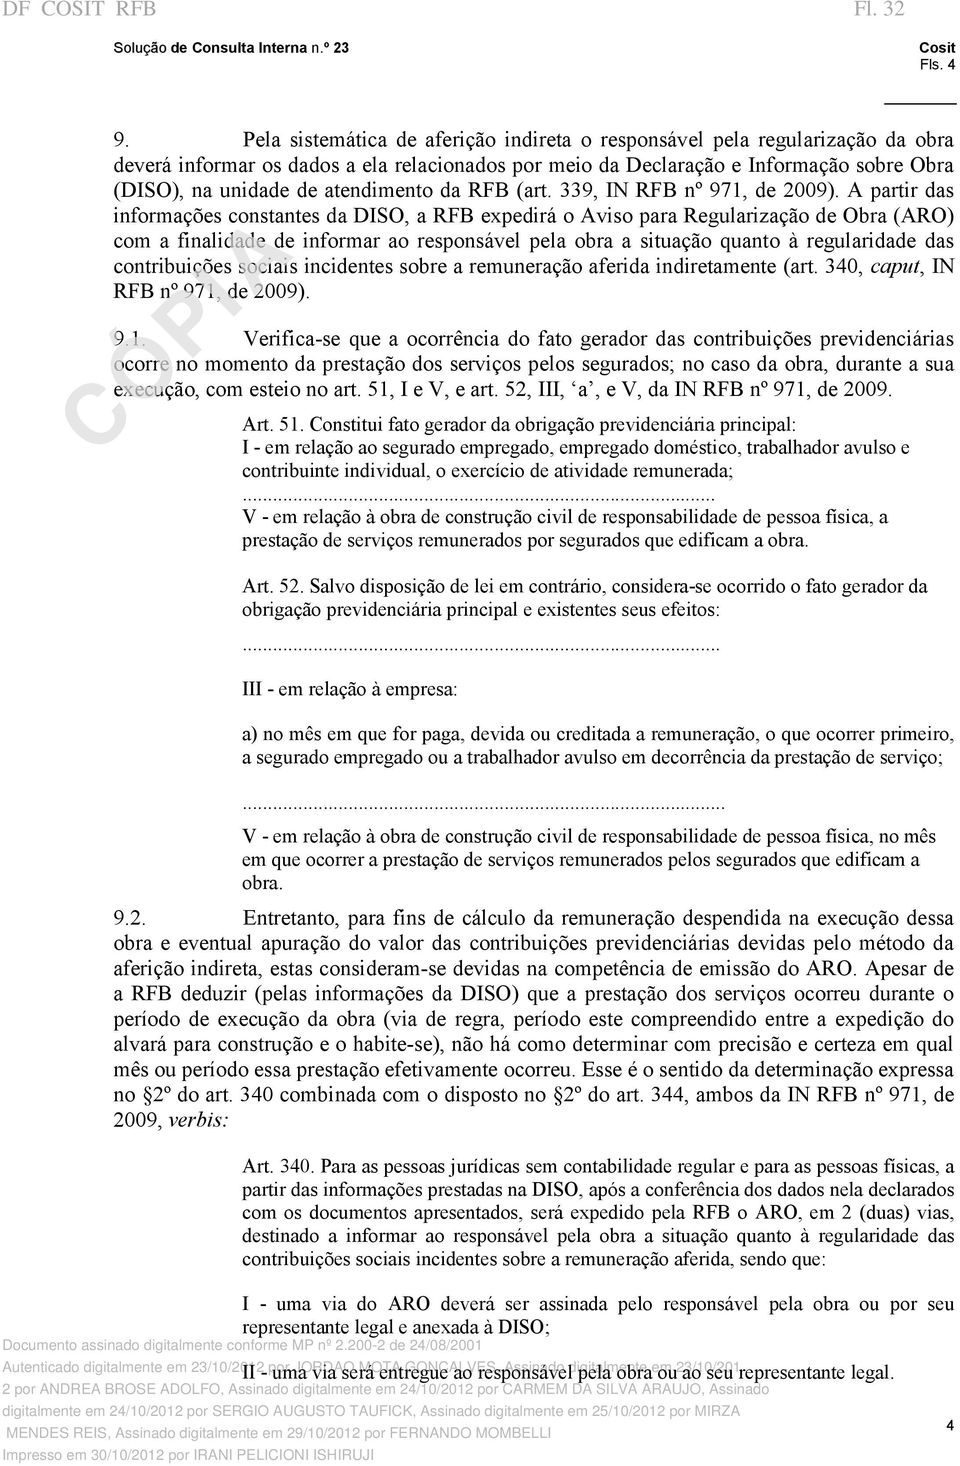 atendimento da RFB (art. 339, IN RFB nº 971, de 2009).